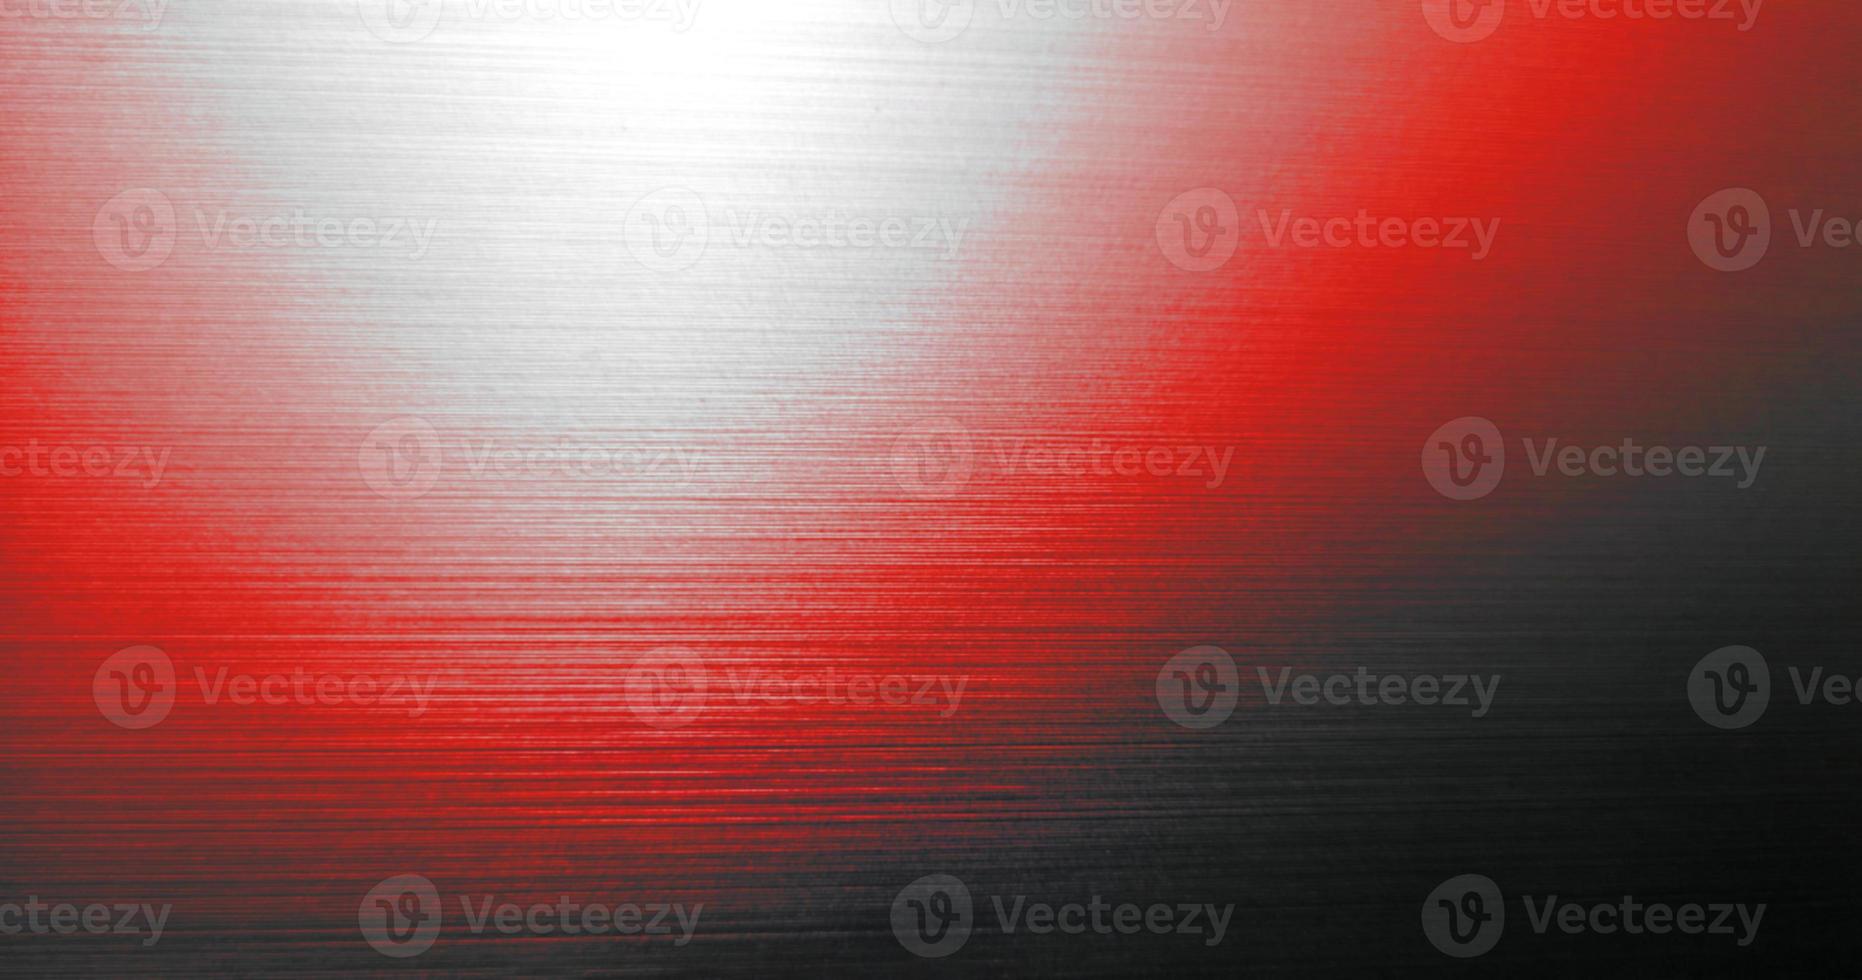 röd svart glansigt papper textur abstrakt bakgrund, tapeter eller bakgrund konst. tomt omslagspapper, affisch, glänsande kartong för dekorativt designelement, material i rostfritt stål foto